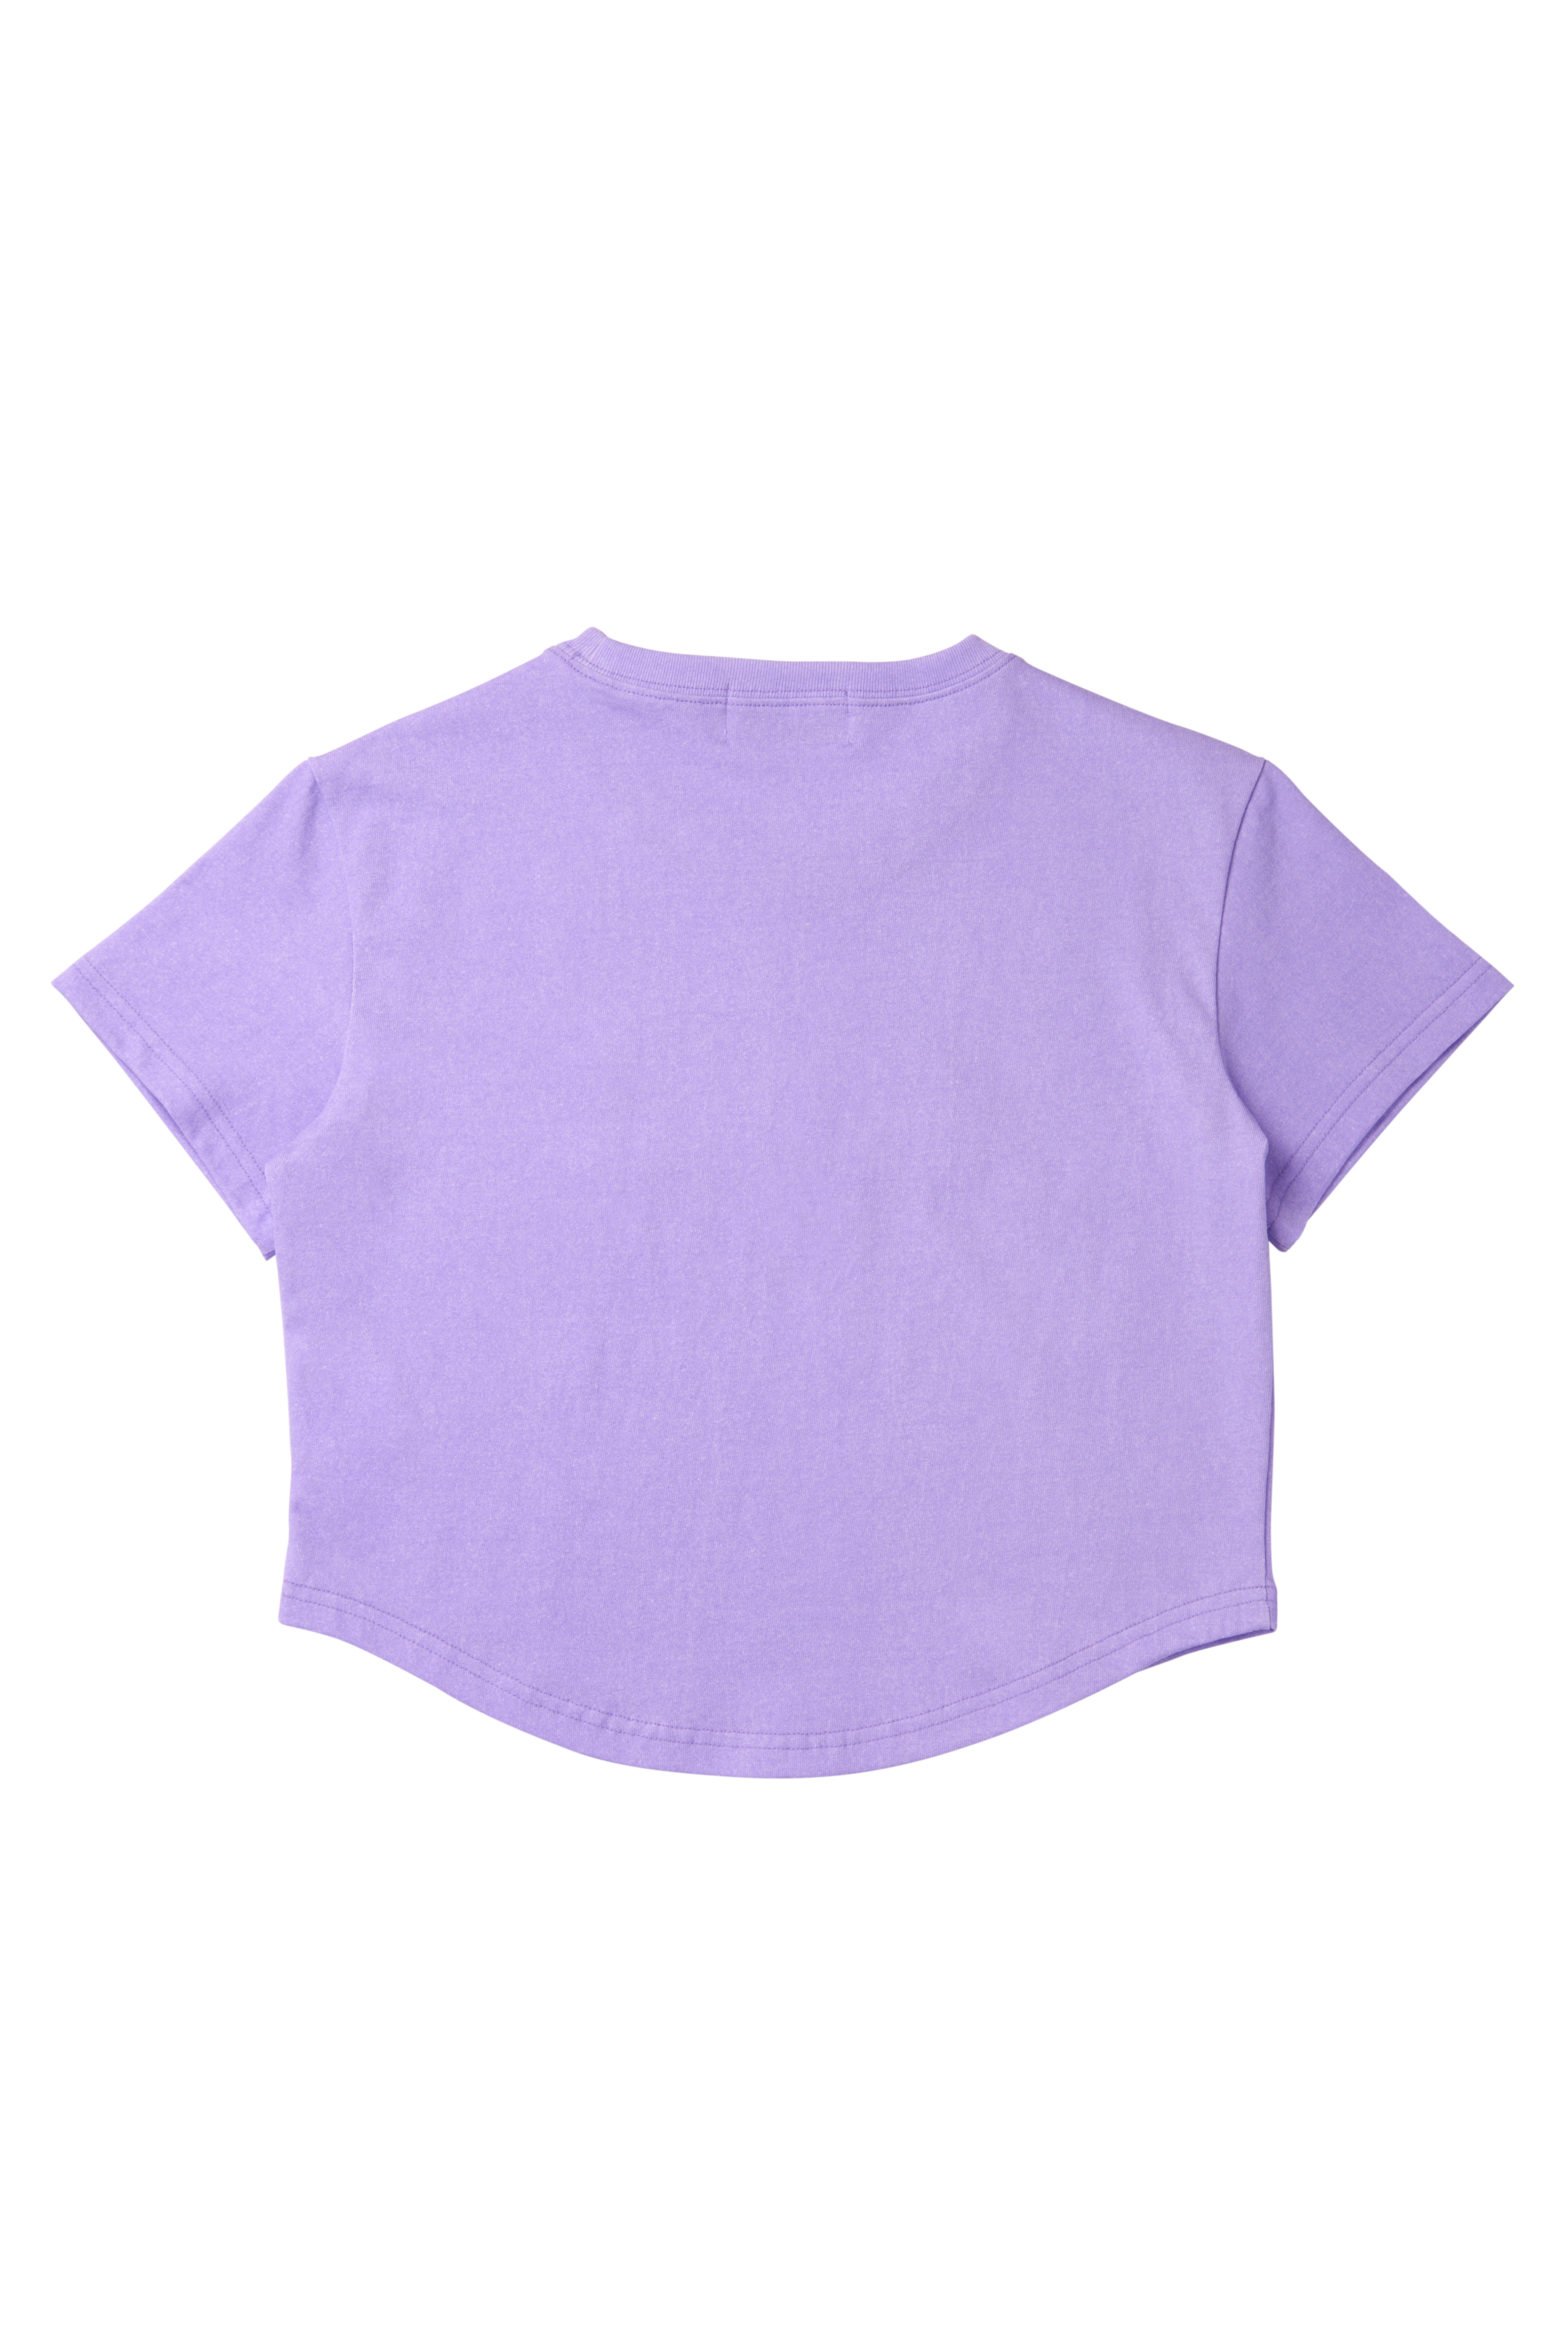 韓國EMIS - CROPPED CHAIN STITCH T-SHIRT-LIGHT PURPLE 鍊式縫線短版 T 卹-淺紫色